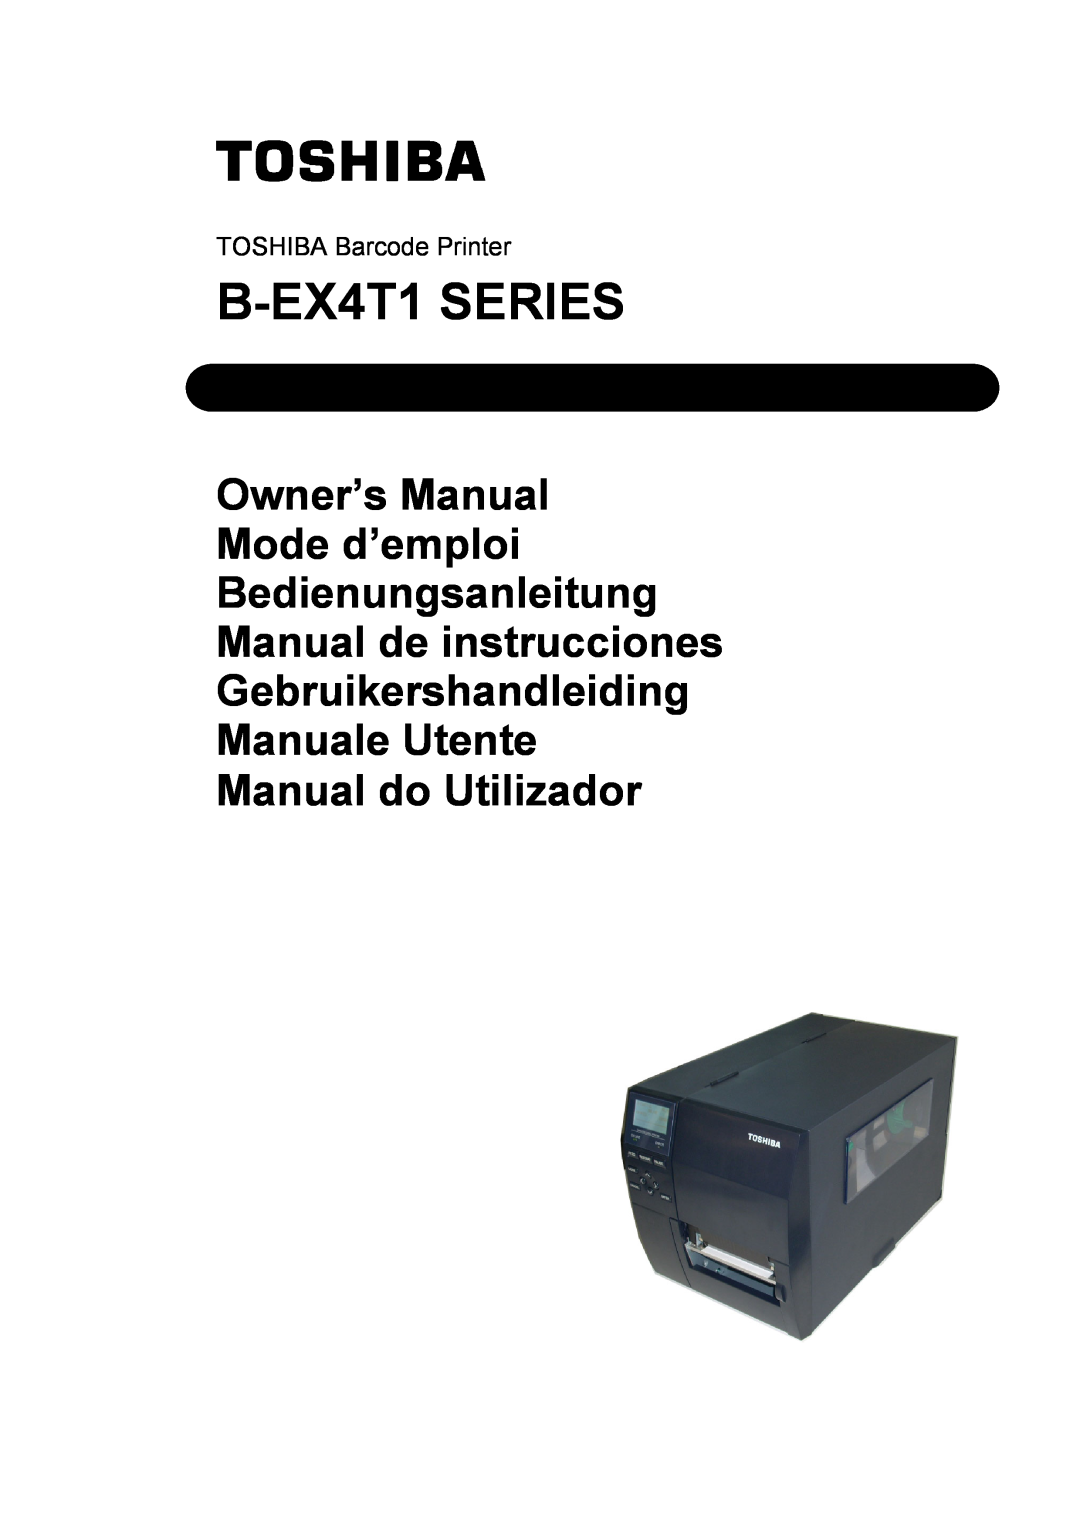 Toshiba manual B-EX4T1 SERIES, TOSHIBA Barcode Printer 